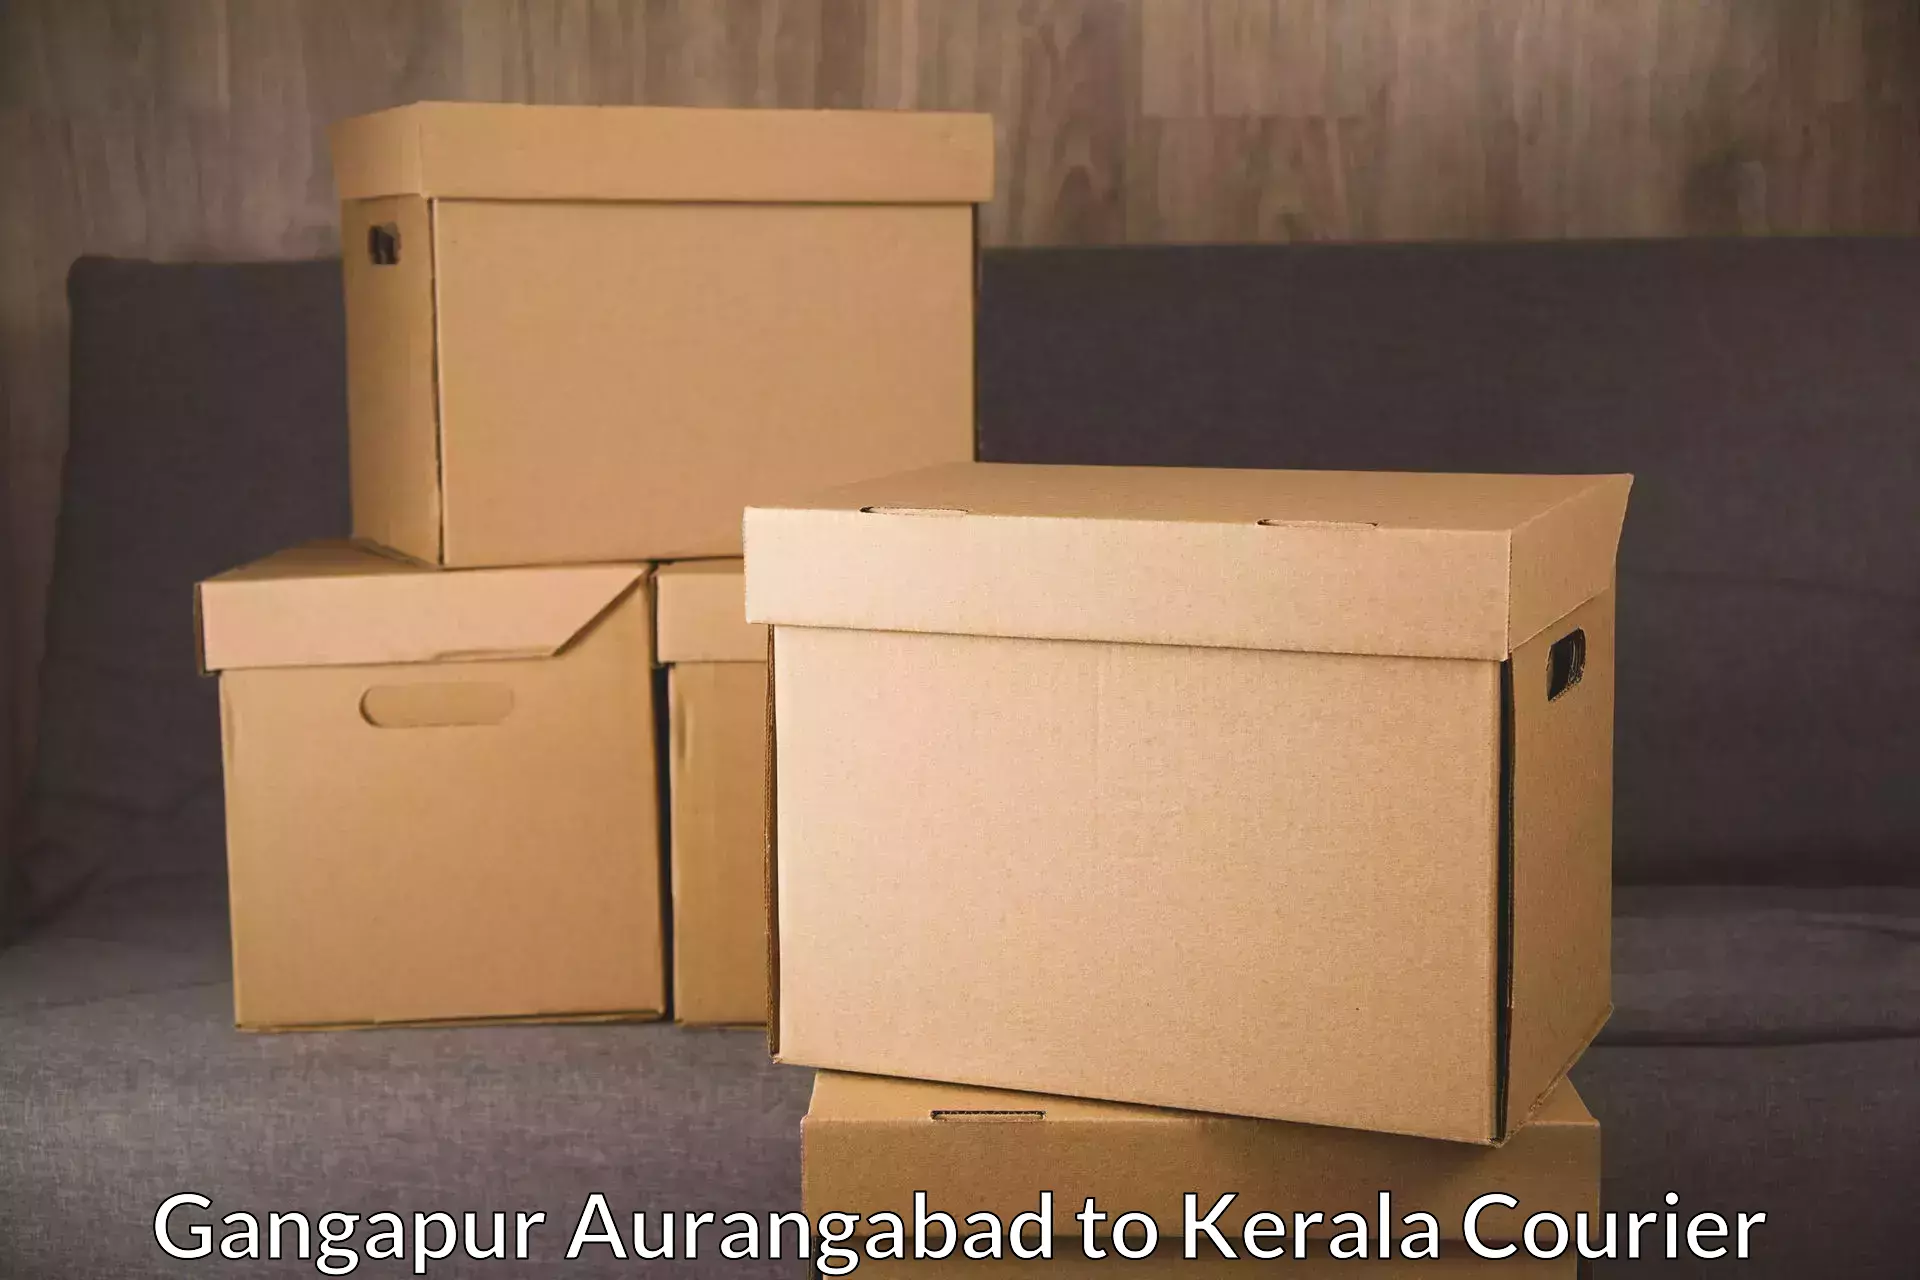 Express delivery capabilities Gangapur Aurangabad to Nuchiyad